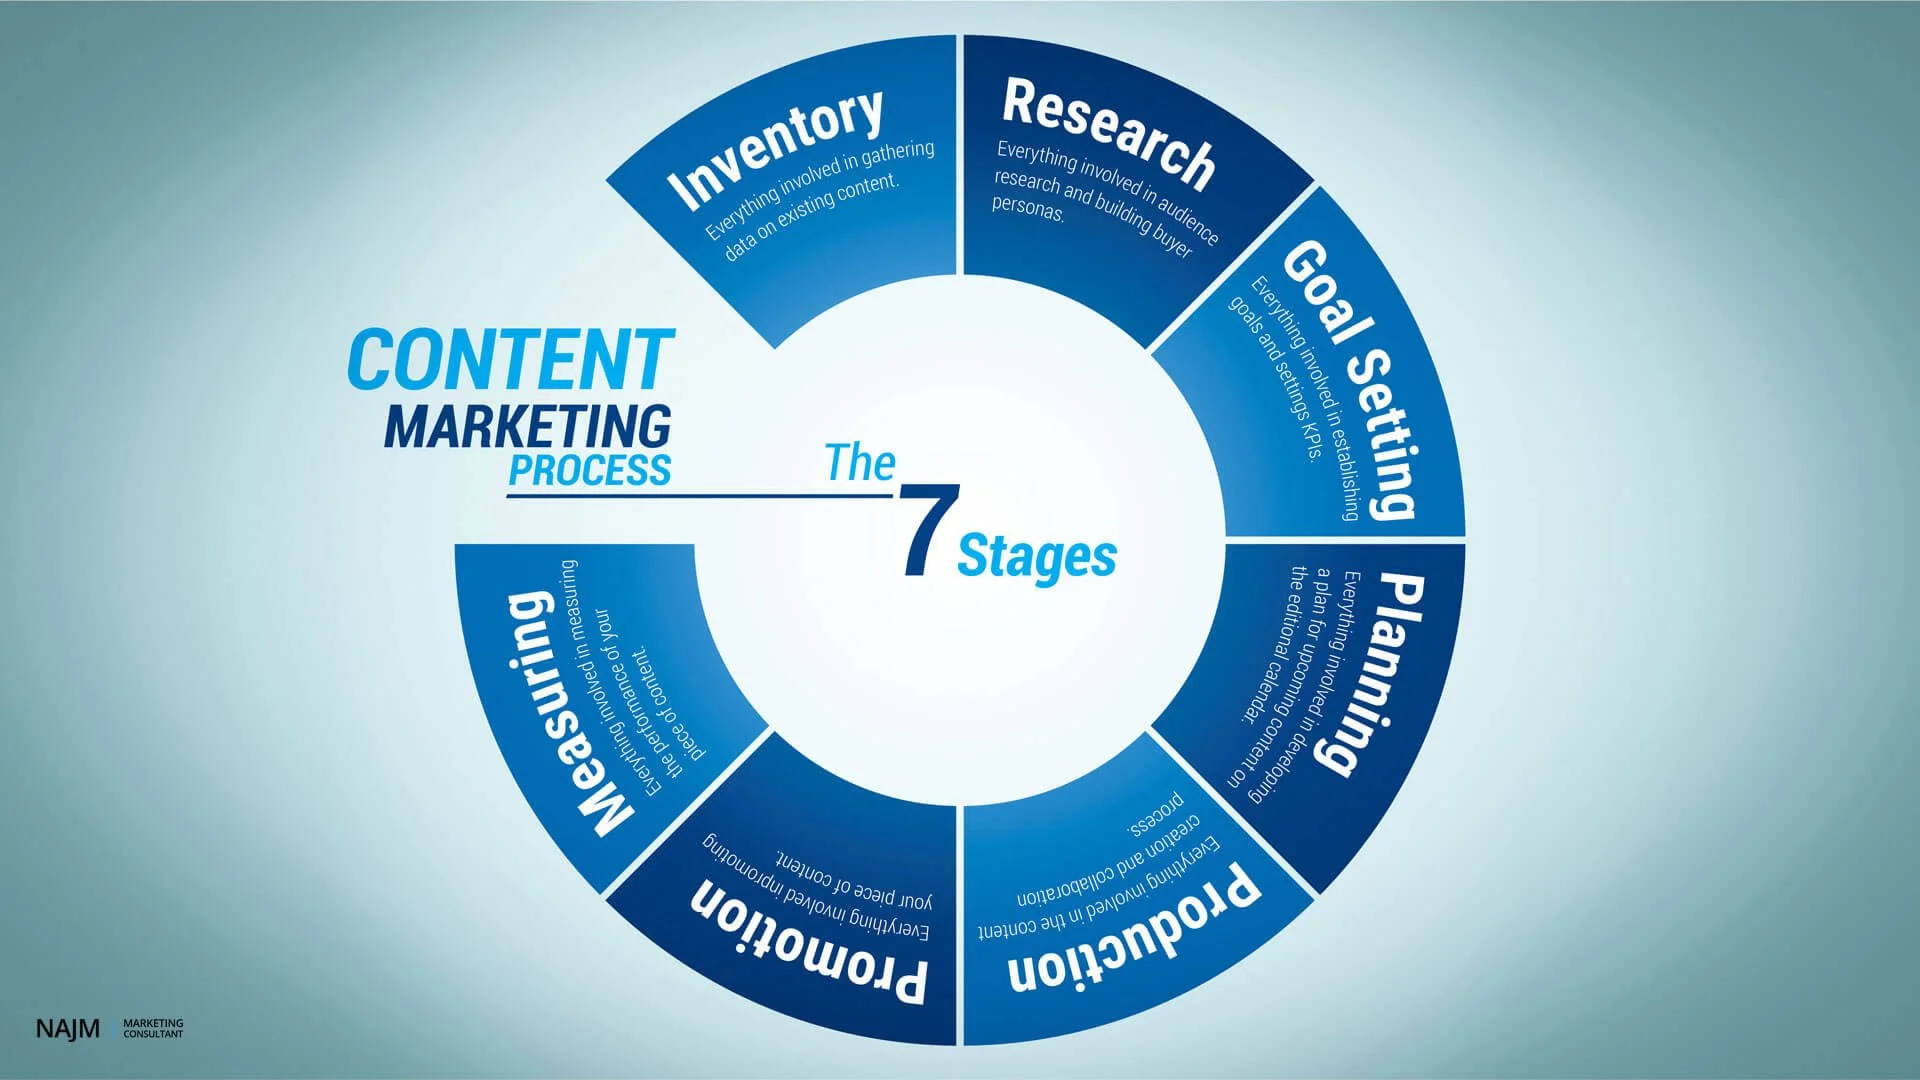 Content marketing process
